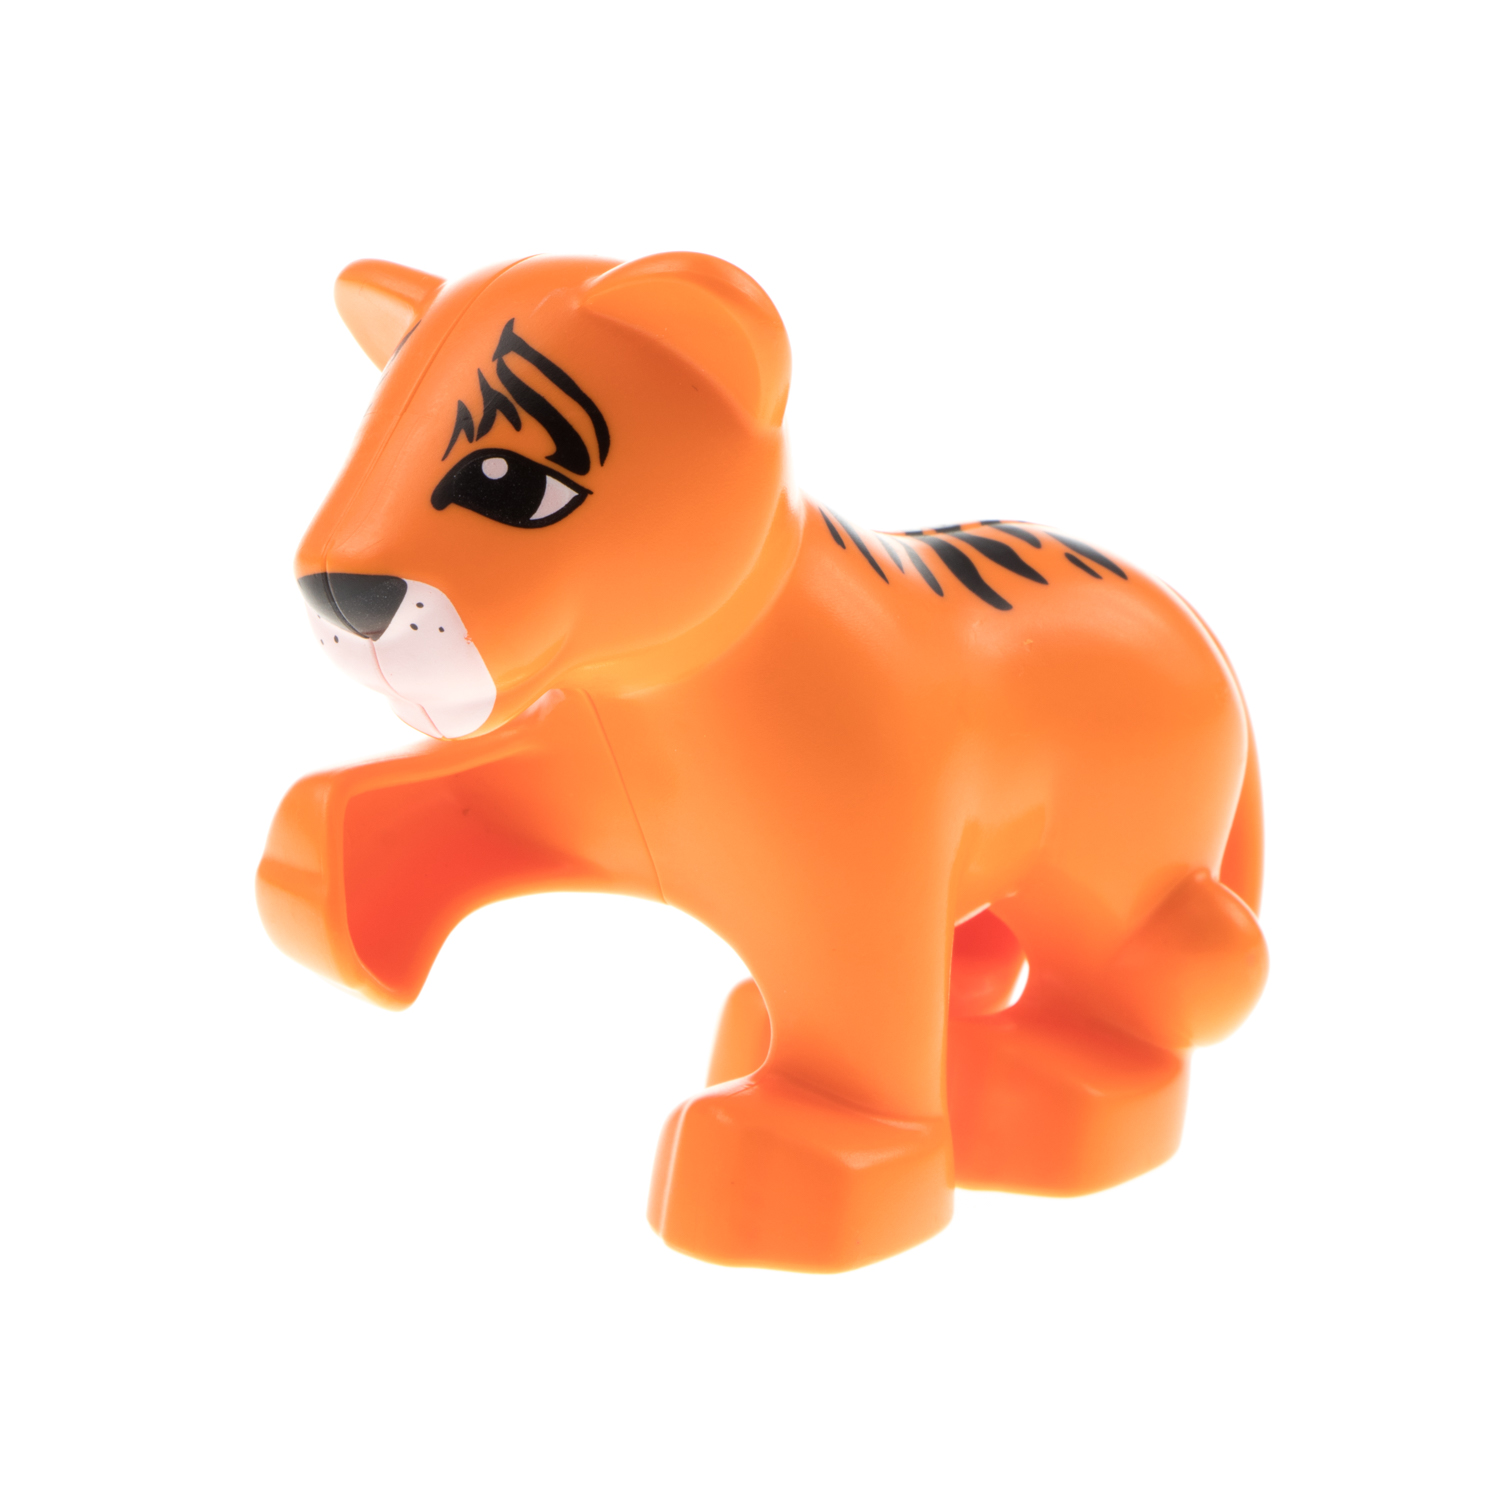 Politistation ring Vag 1x Lego Duplo Tier Baby Tiger orange Safari Zoo Katze Löwe 54300cx4